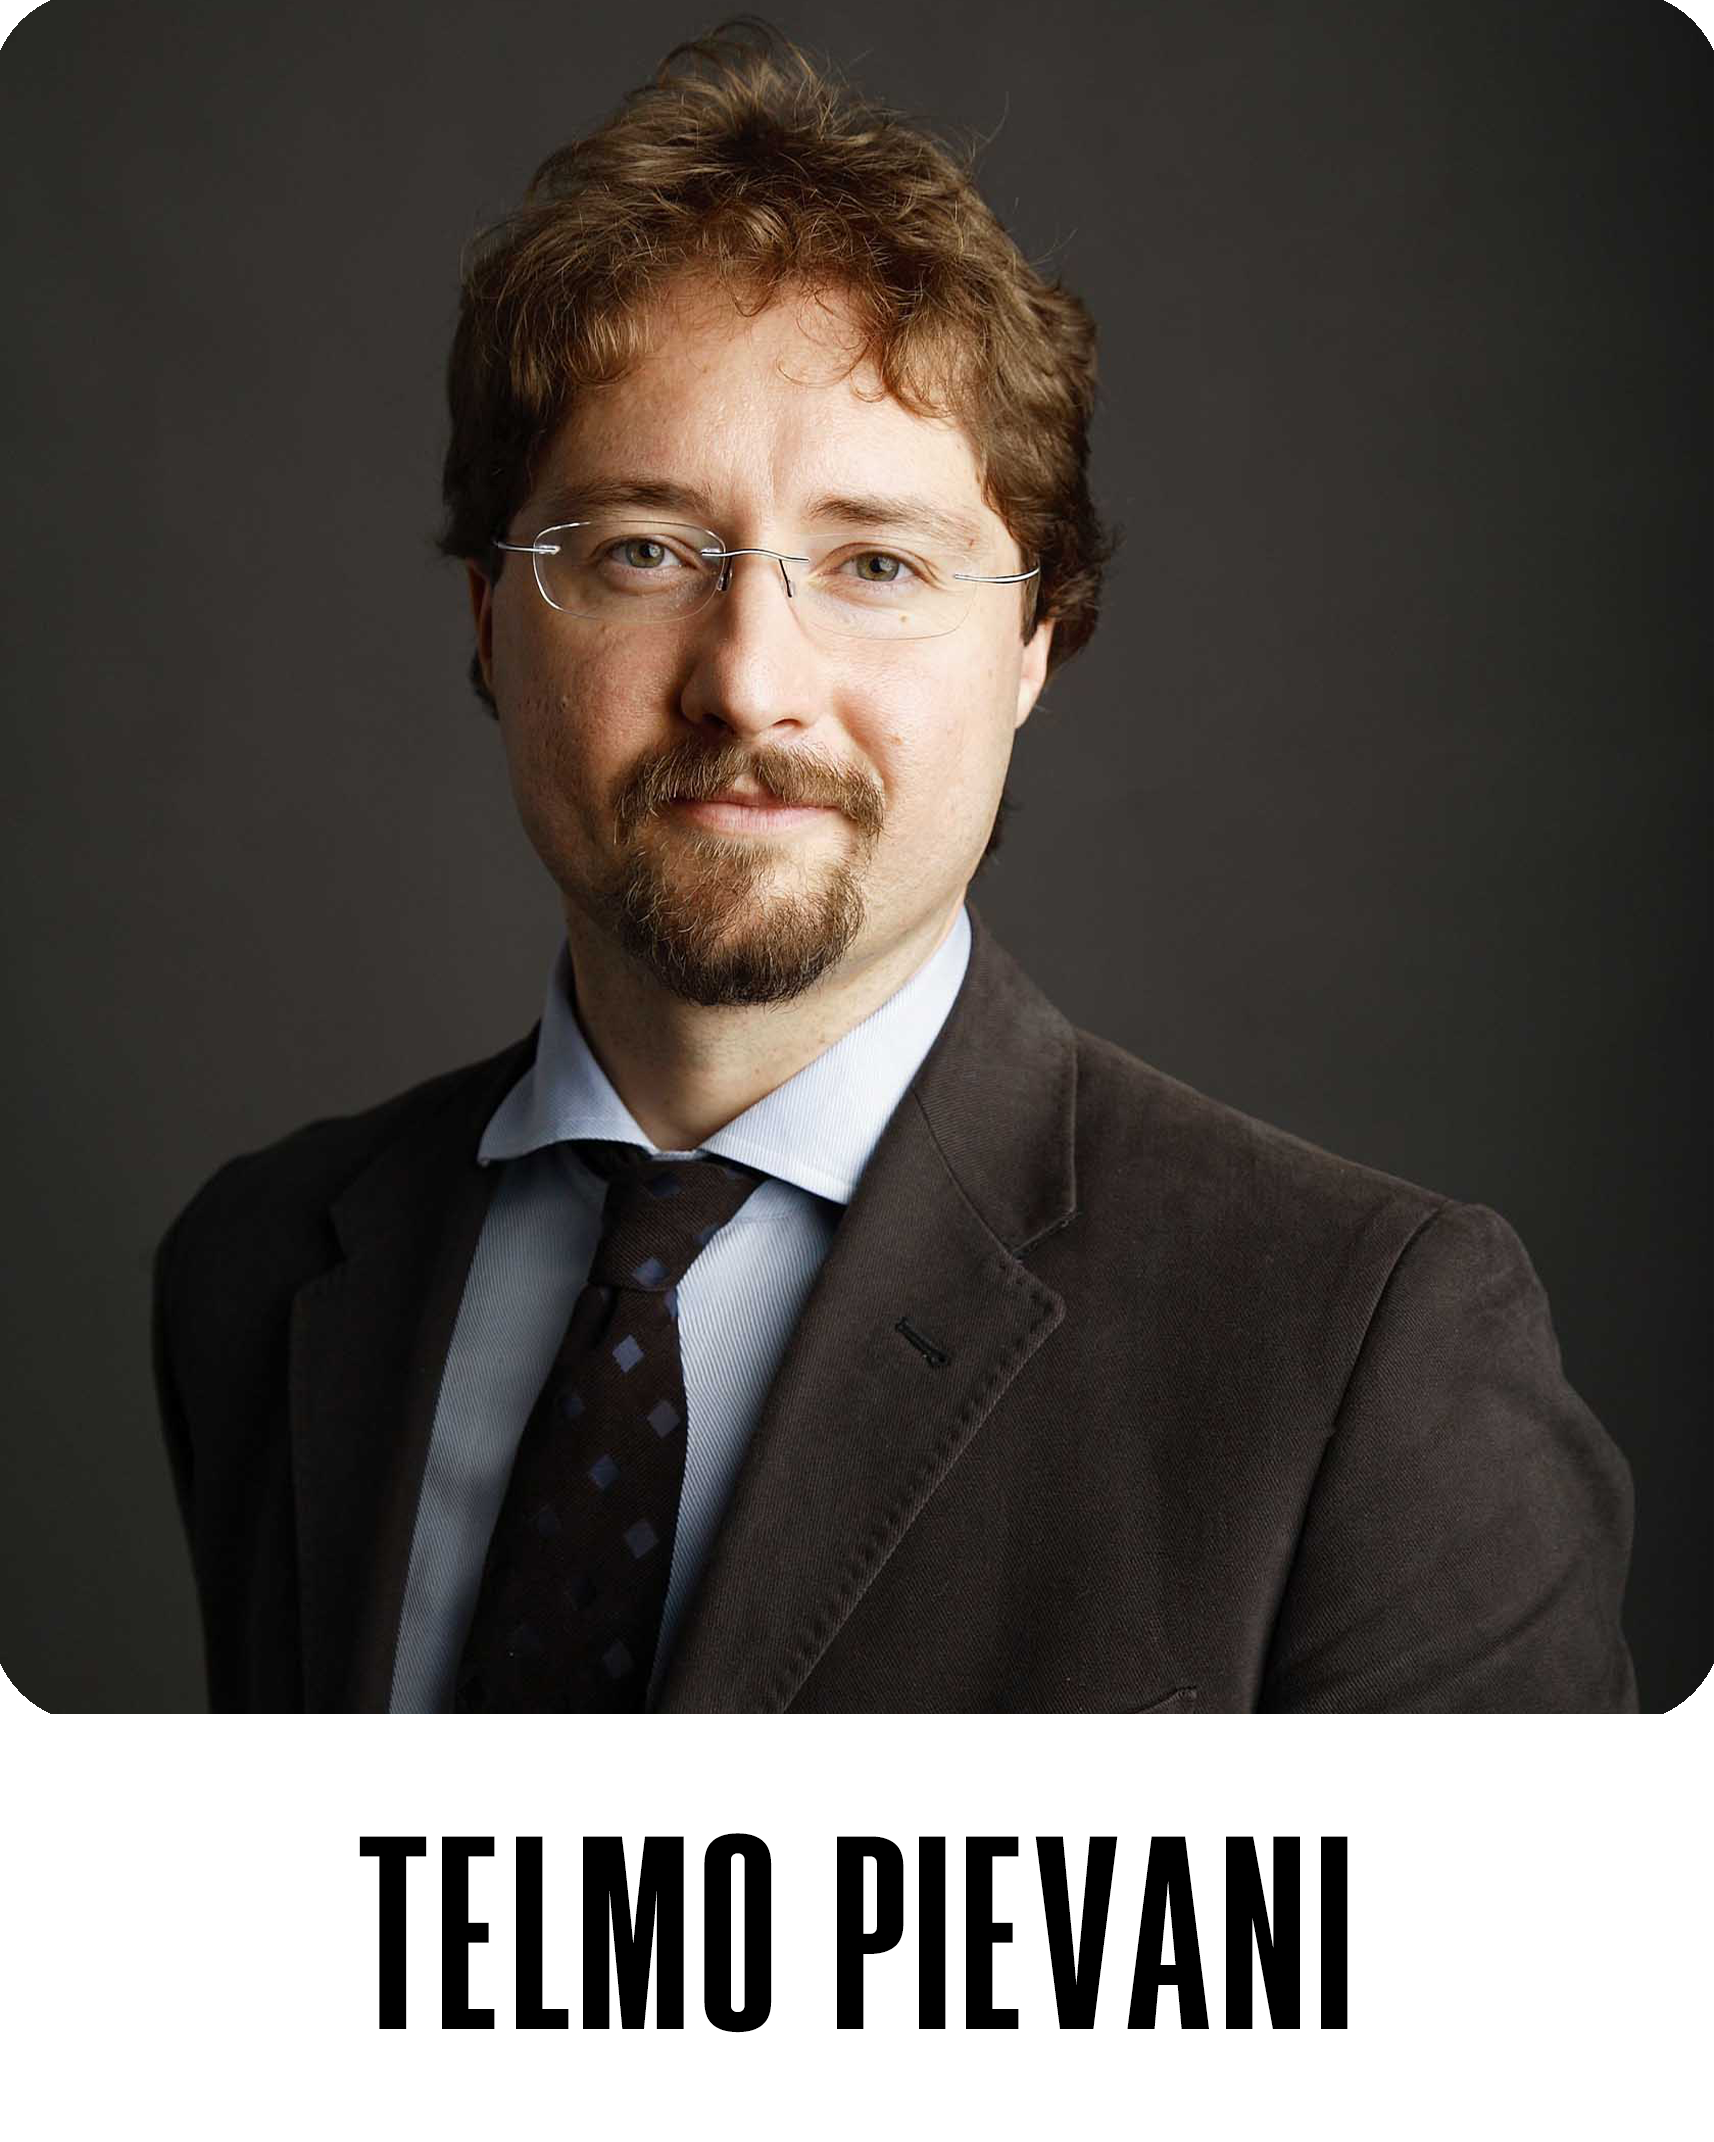 Telmo Pievani